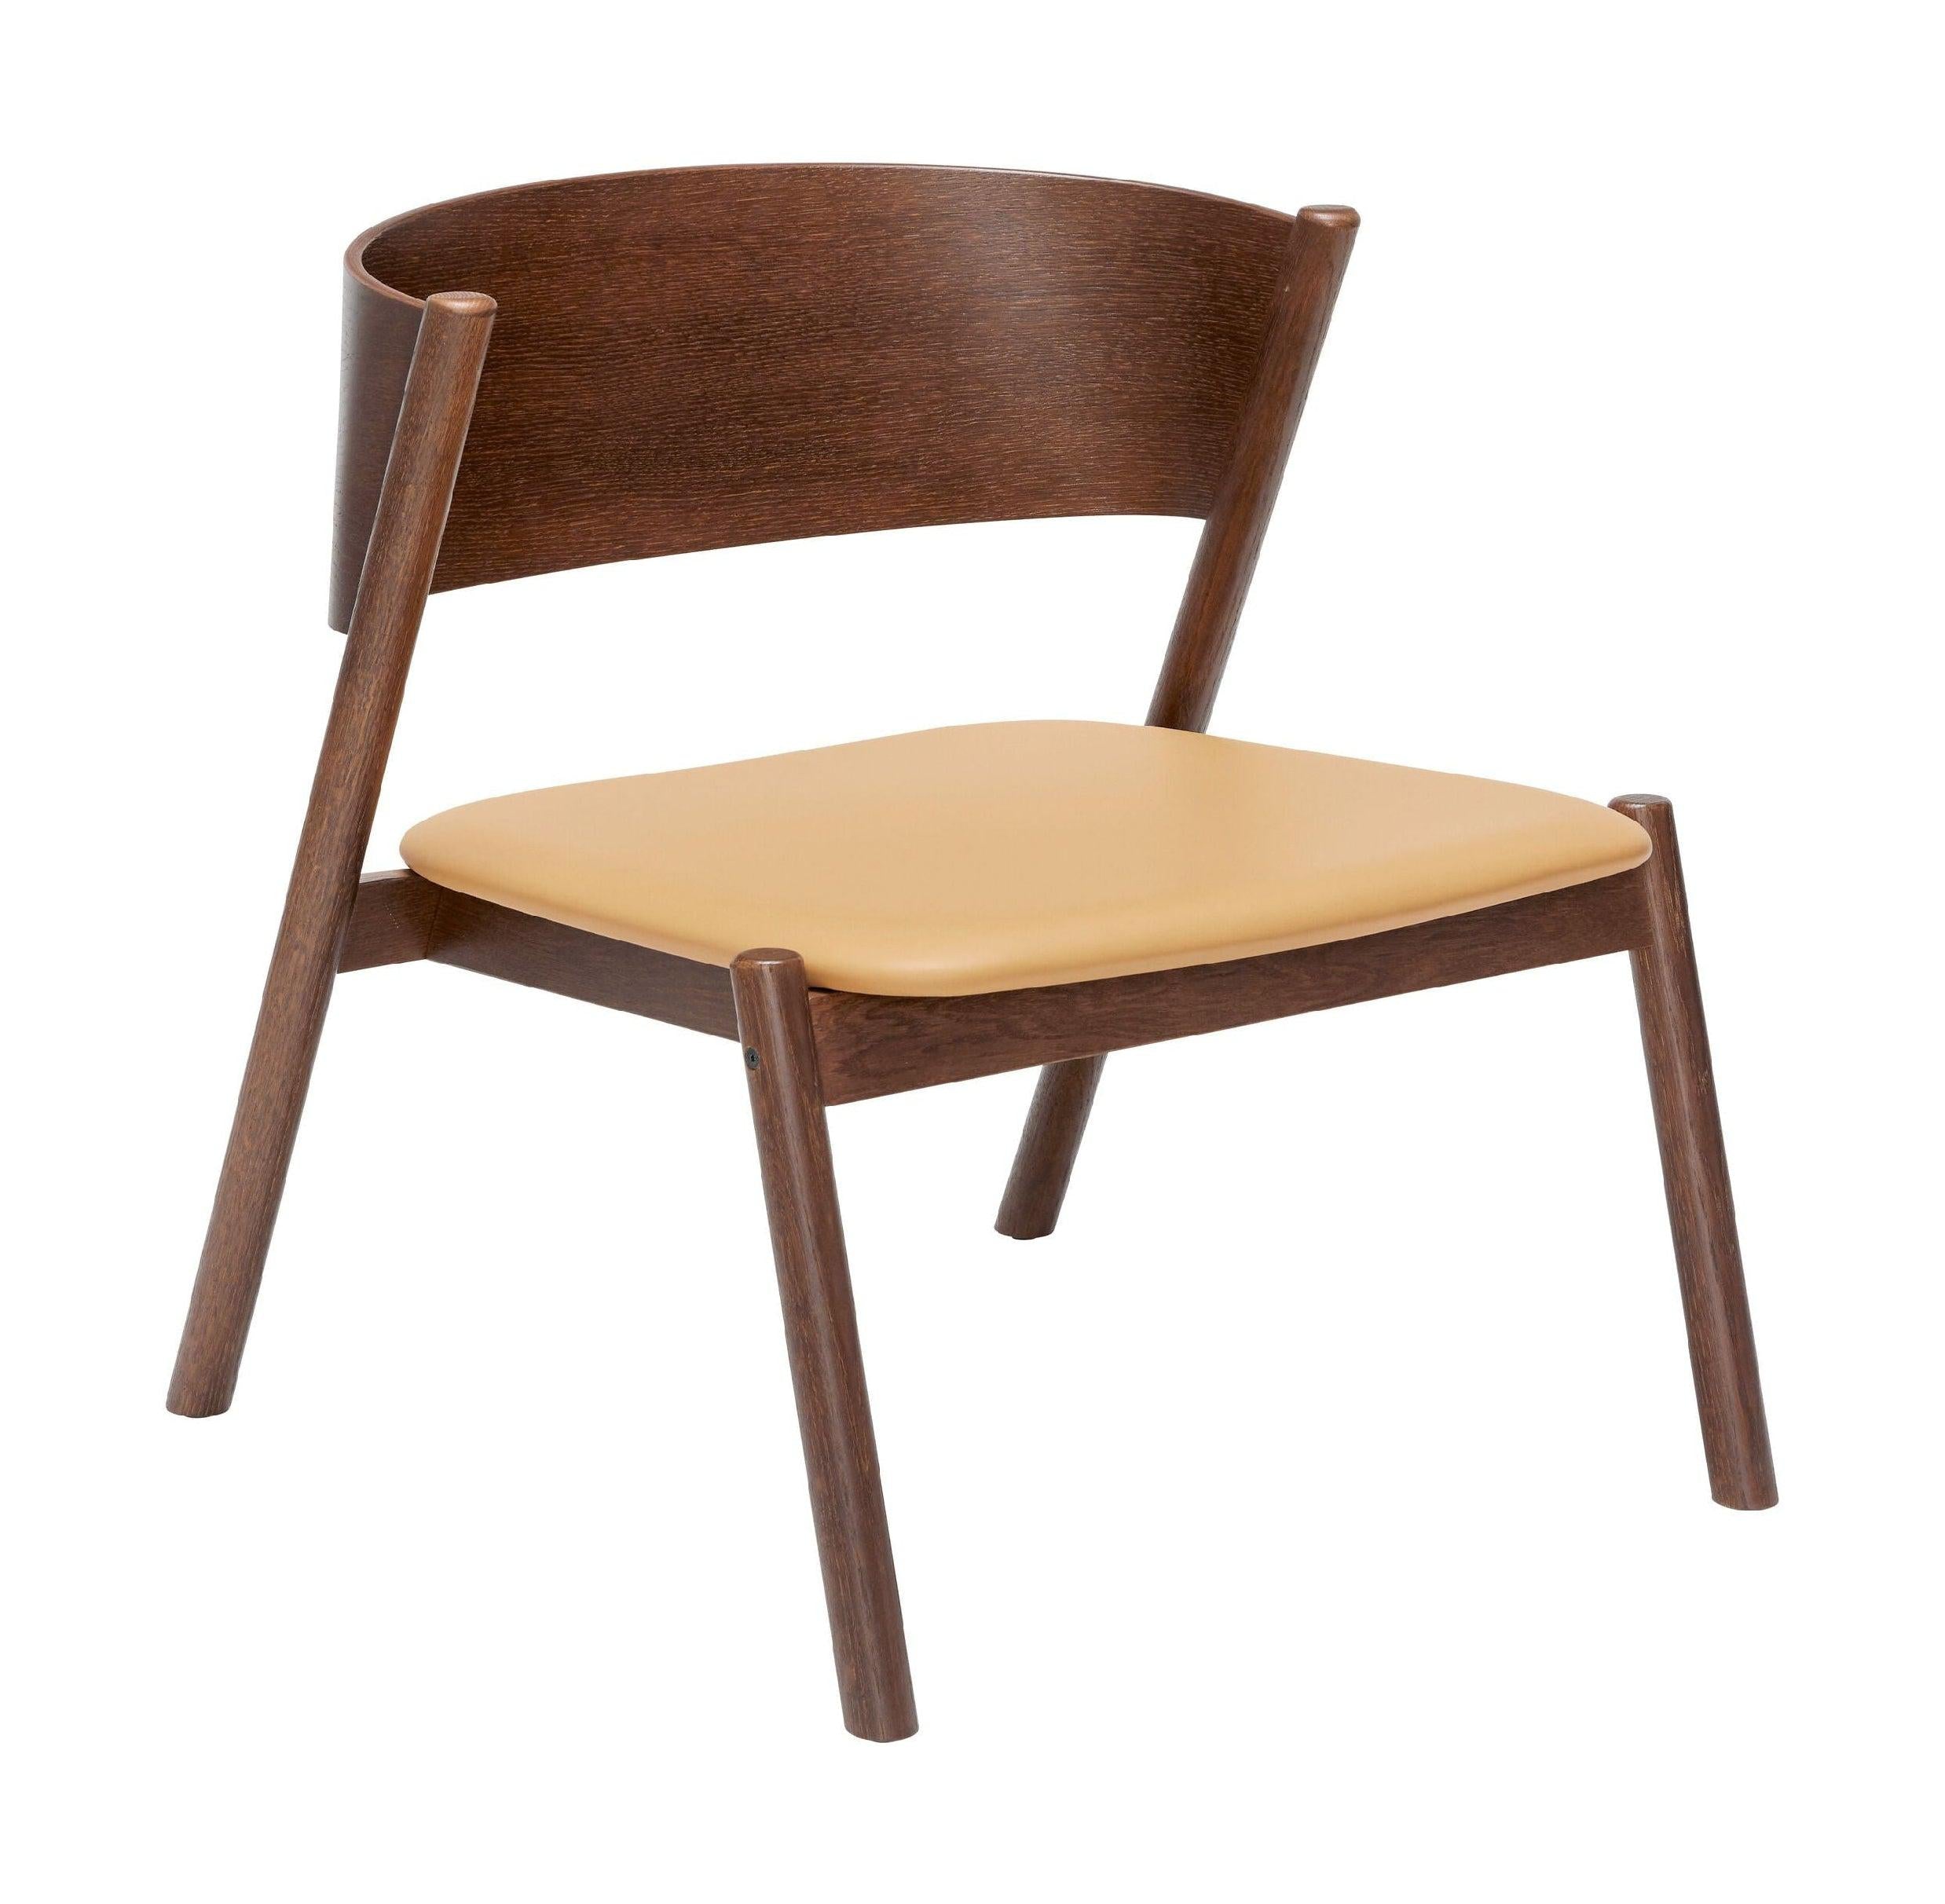 Hübsch skrå lounge stol sæde, mørkebrun